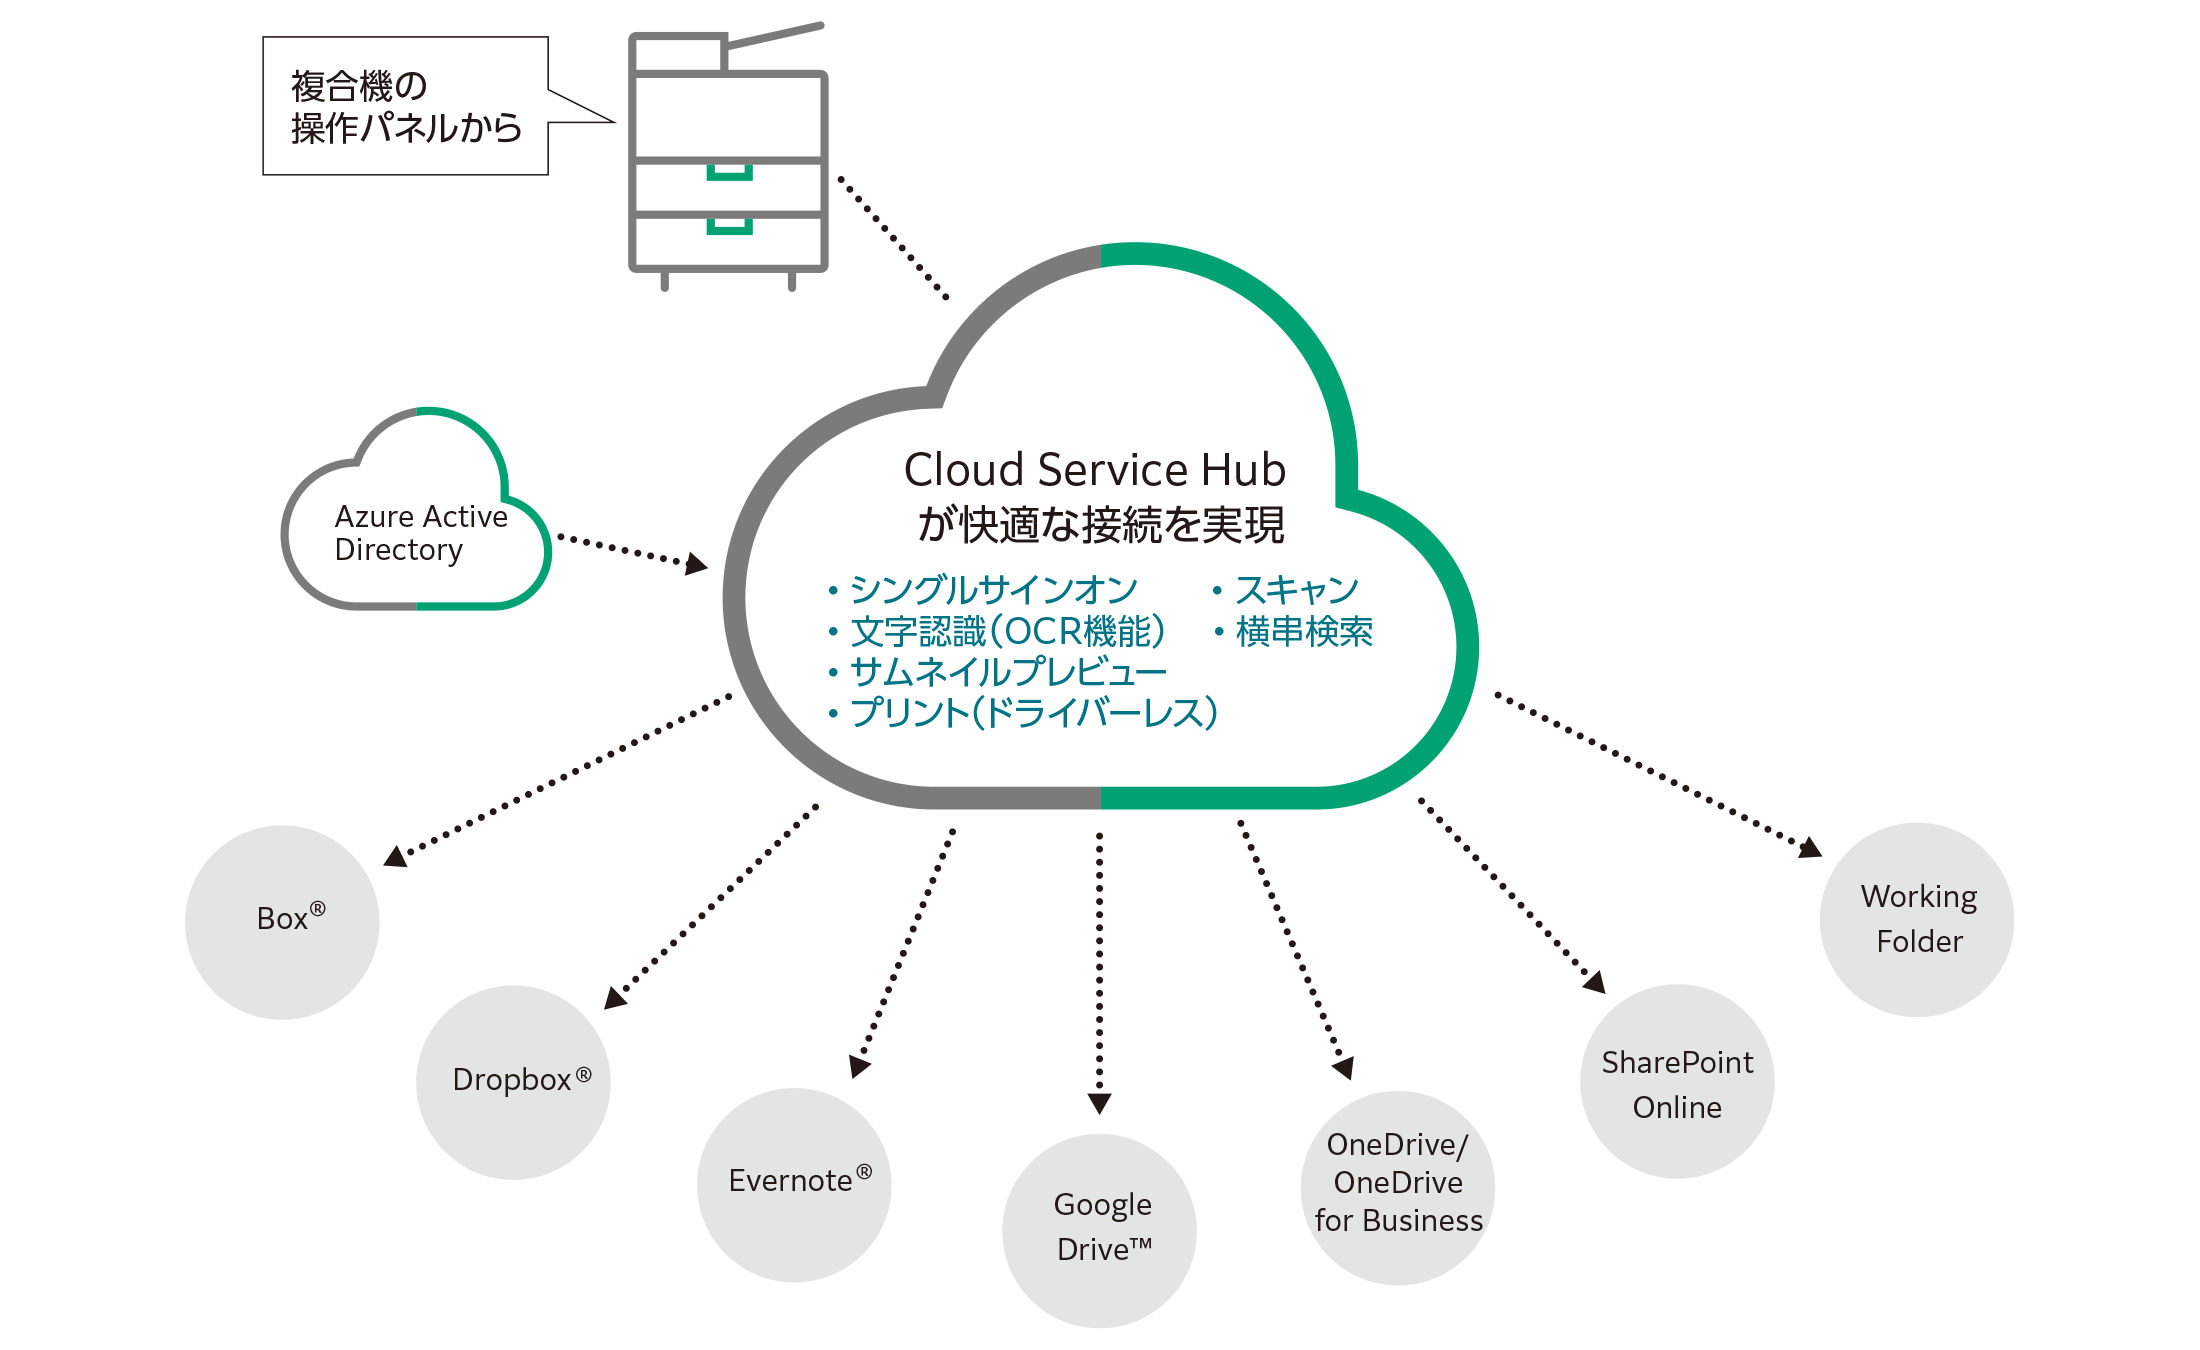 Cloud Service Hubは複合機をハブにして、Box®、Dropbox®、Evernote®、Google Drive™、OneDrive / OneDrive for Business、SharePoint Online、Working Folder / Working Folder Plusの各種クラウドサービスの便利な機能をフル活用できます。